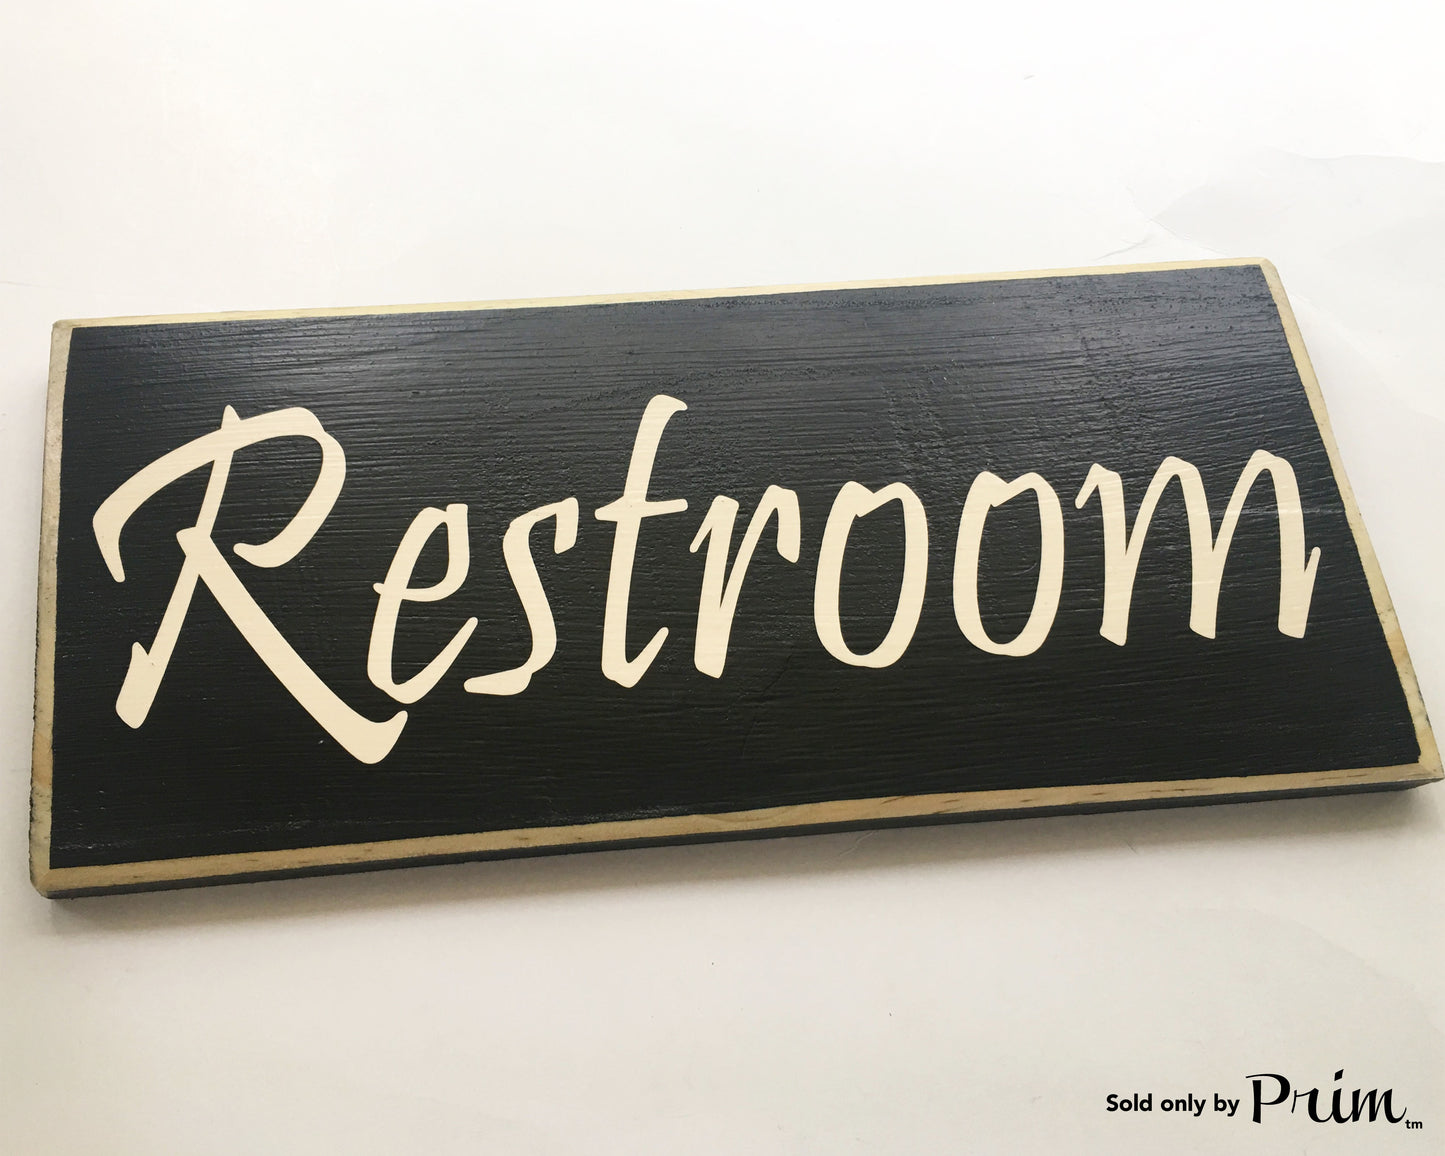 10x4 Restroom Wood Bathroom Bath Sign